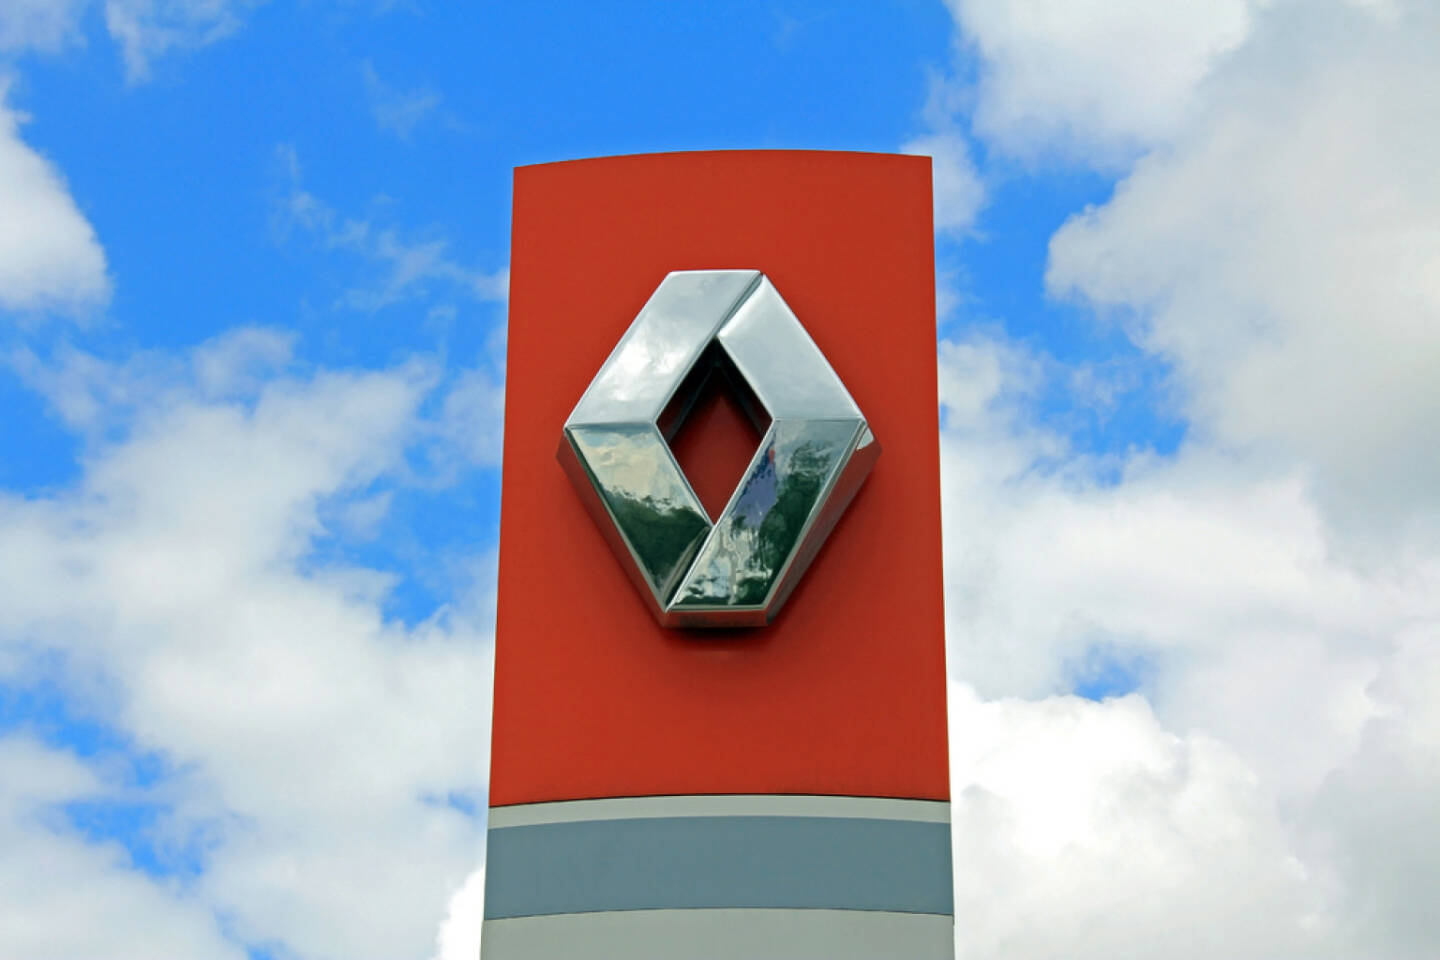 Renault, Logo, Auto, <a href=http://www.shutterstock.com/gallery-576805p1.html?cr=00&pl=edit-00>Taina Sohlman</a> / <a href=http://www.shutterstock.com/editorial?cr=00&pl=edit-00>Shutterstock.com</a>, Taina Sohlman / Shutterstock.com